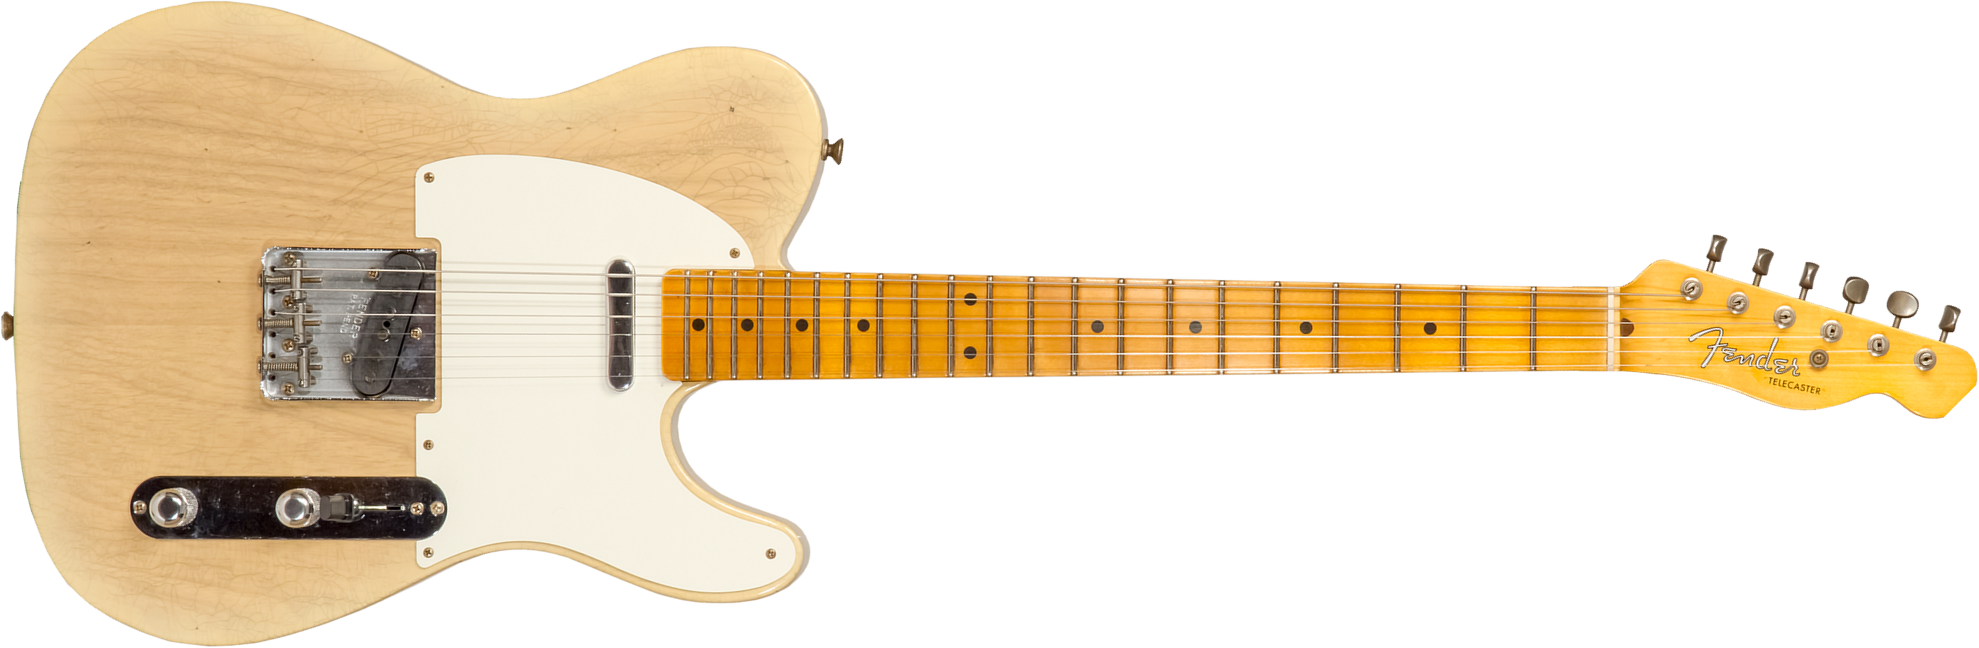 Fender Custom Shop Tele 1955 2s Ht Mn #cz570232 - Journeyman Relic Natural Blonde - E-Gitarre in Teleform - Main picture